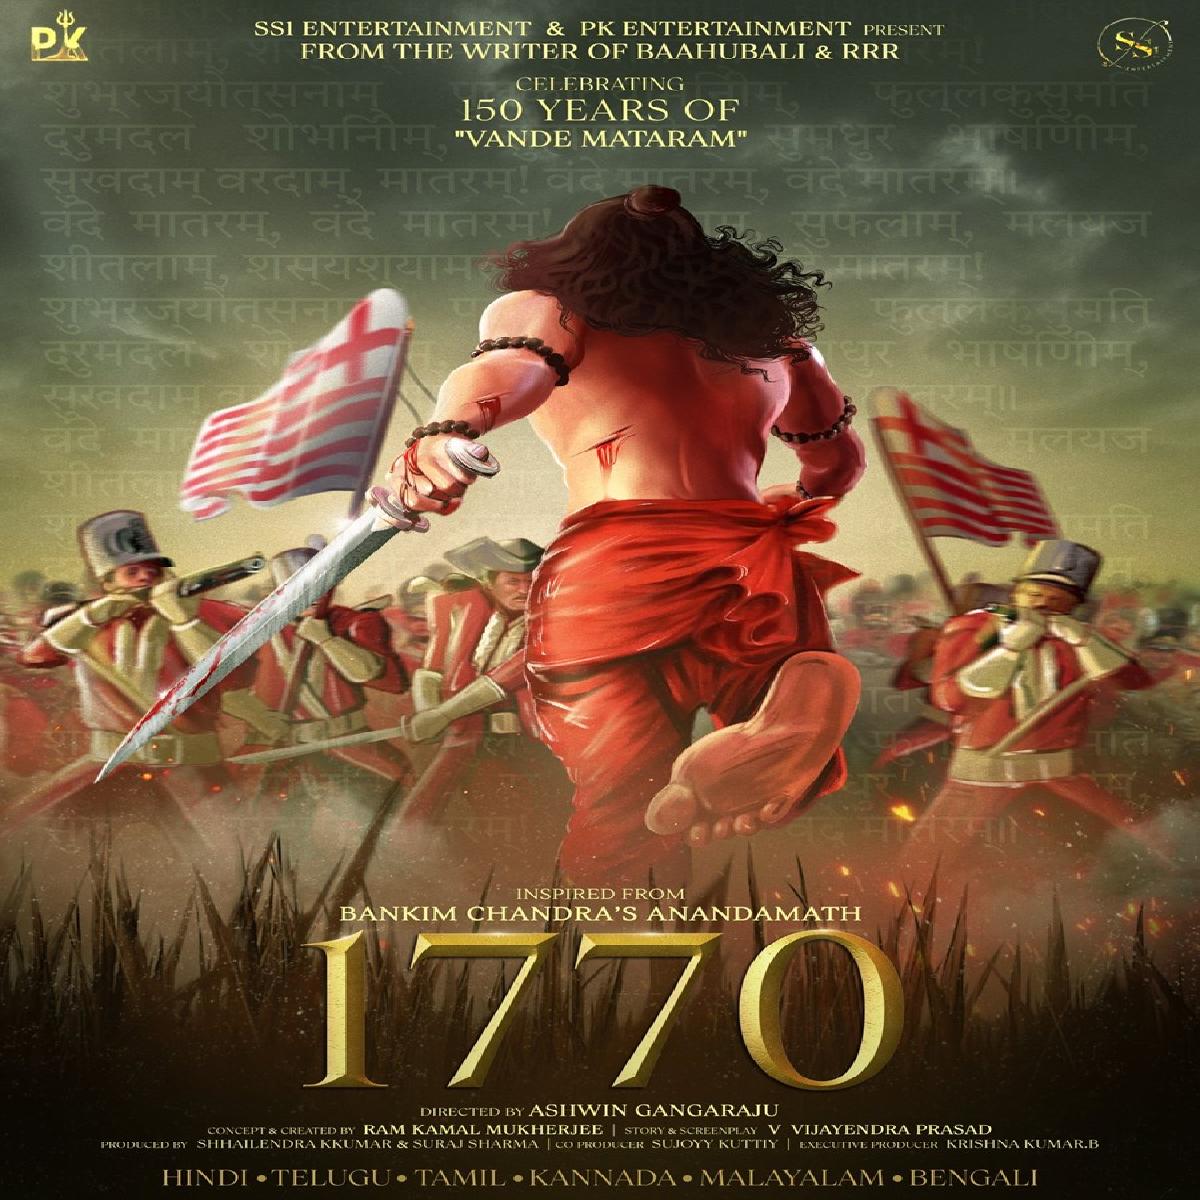 1770 – The Movie Confirmed, Helmed by Ashwin Gangaraju